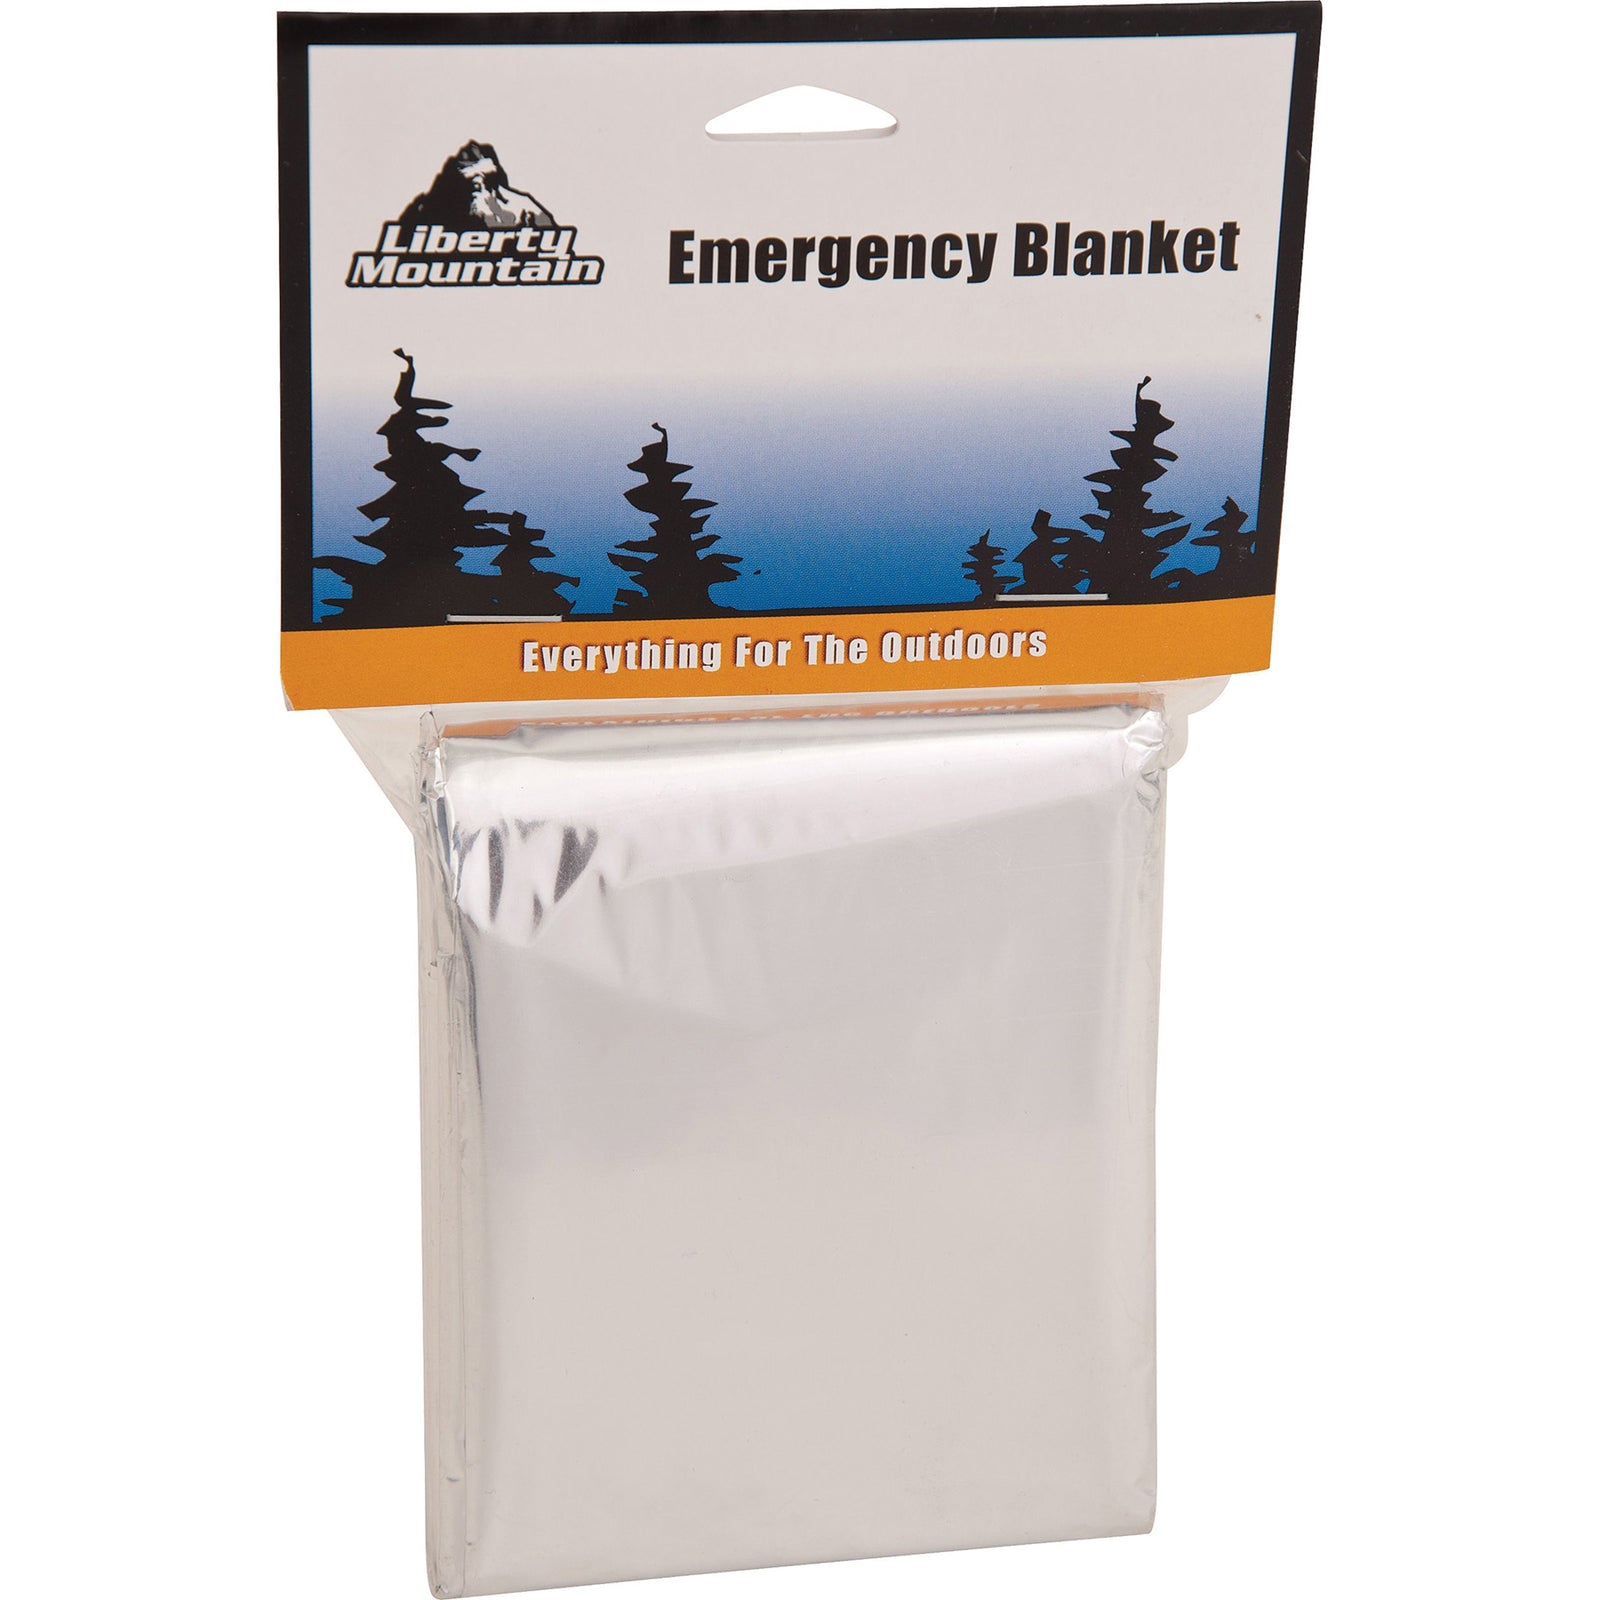 an emergency blanket to reflect body heat